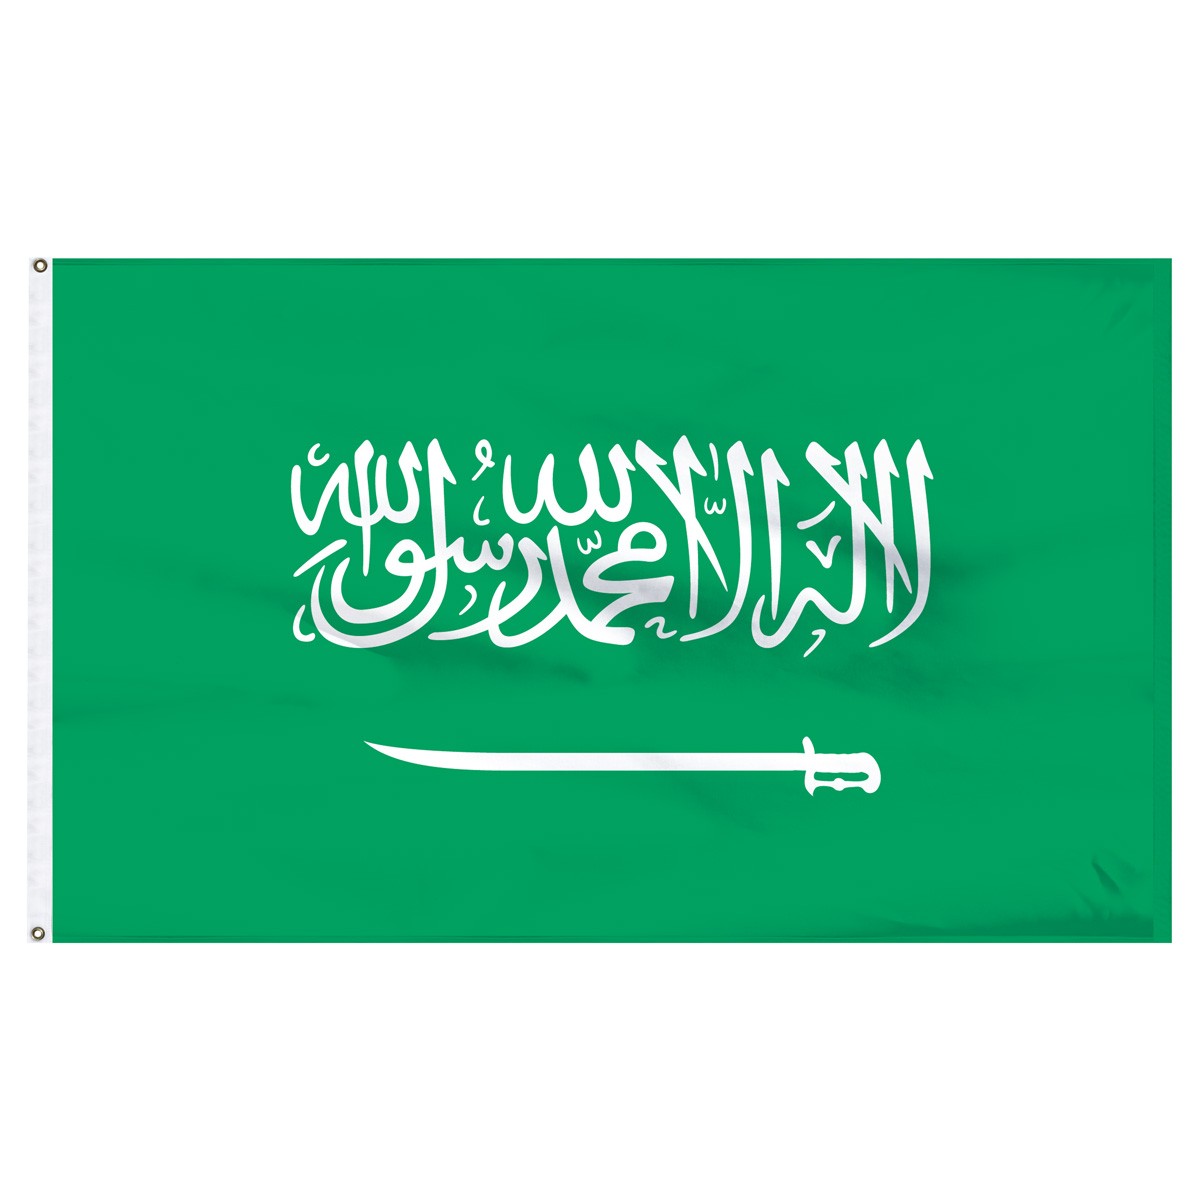 Language Question In The Saudi Arabia